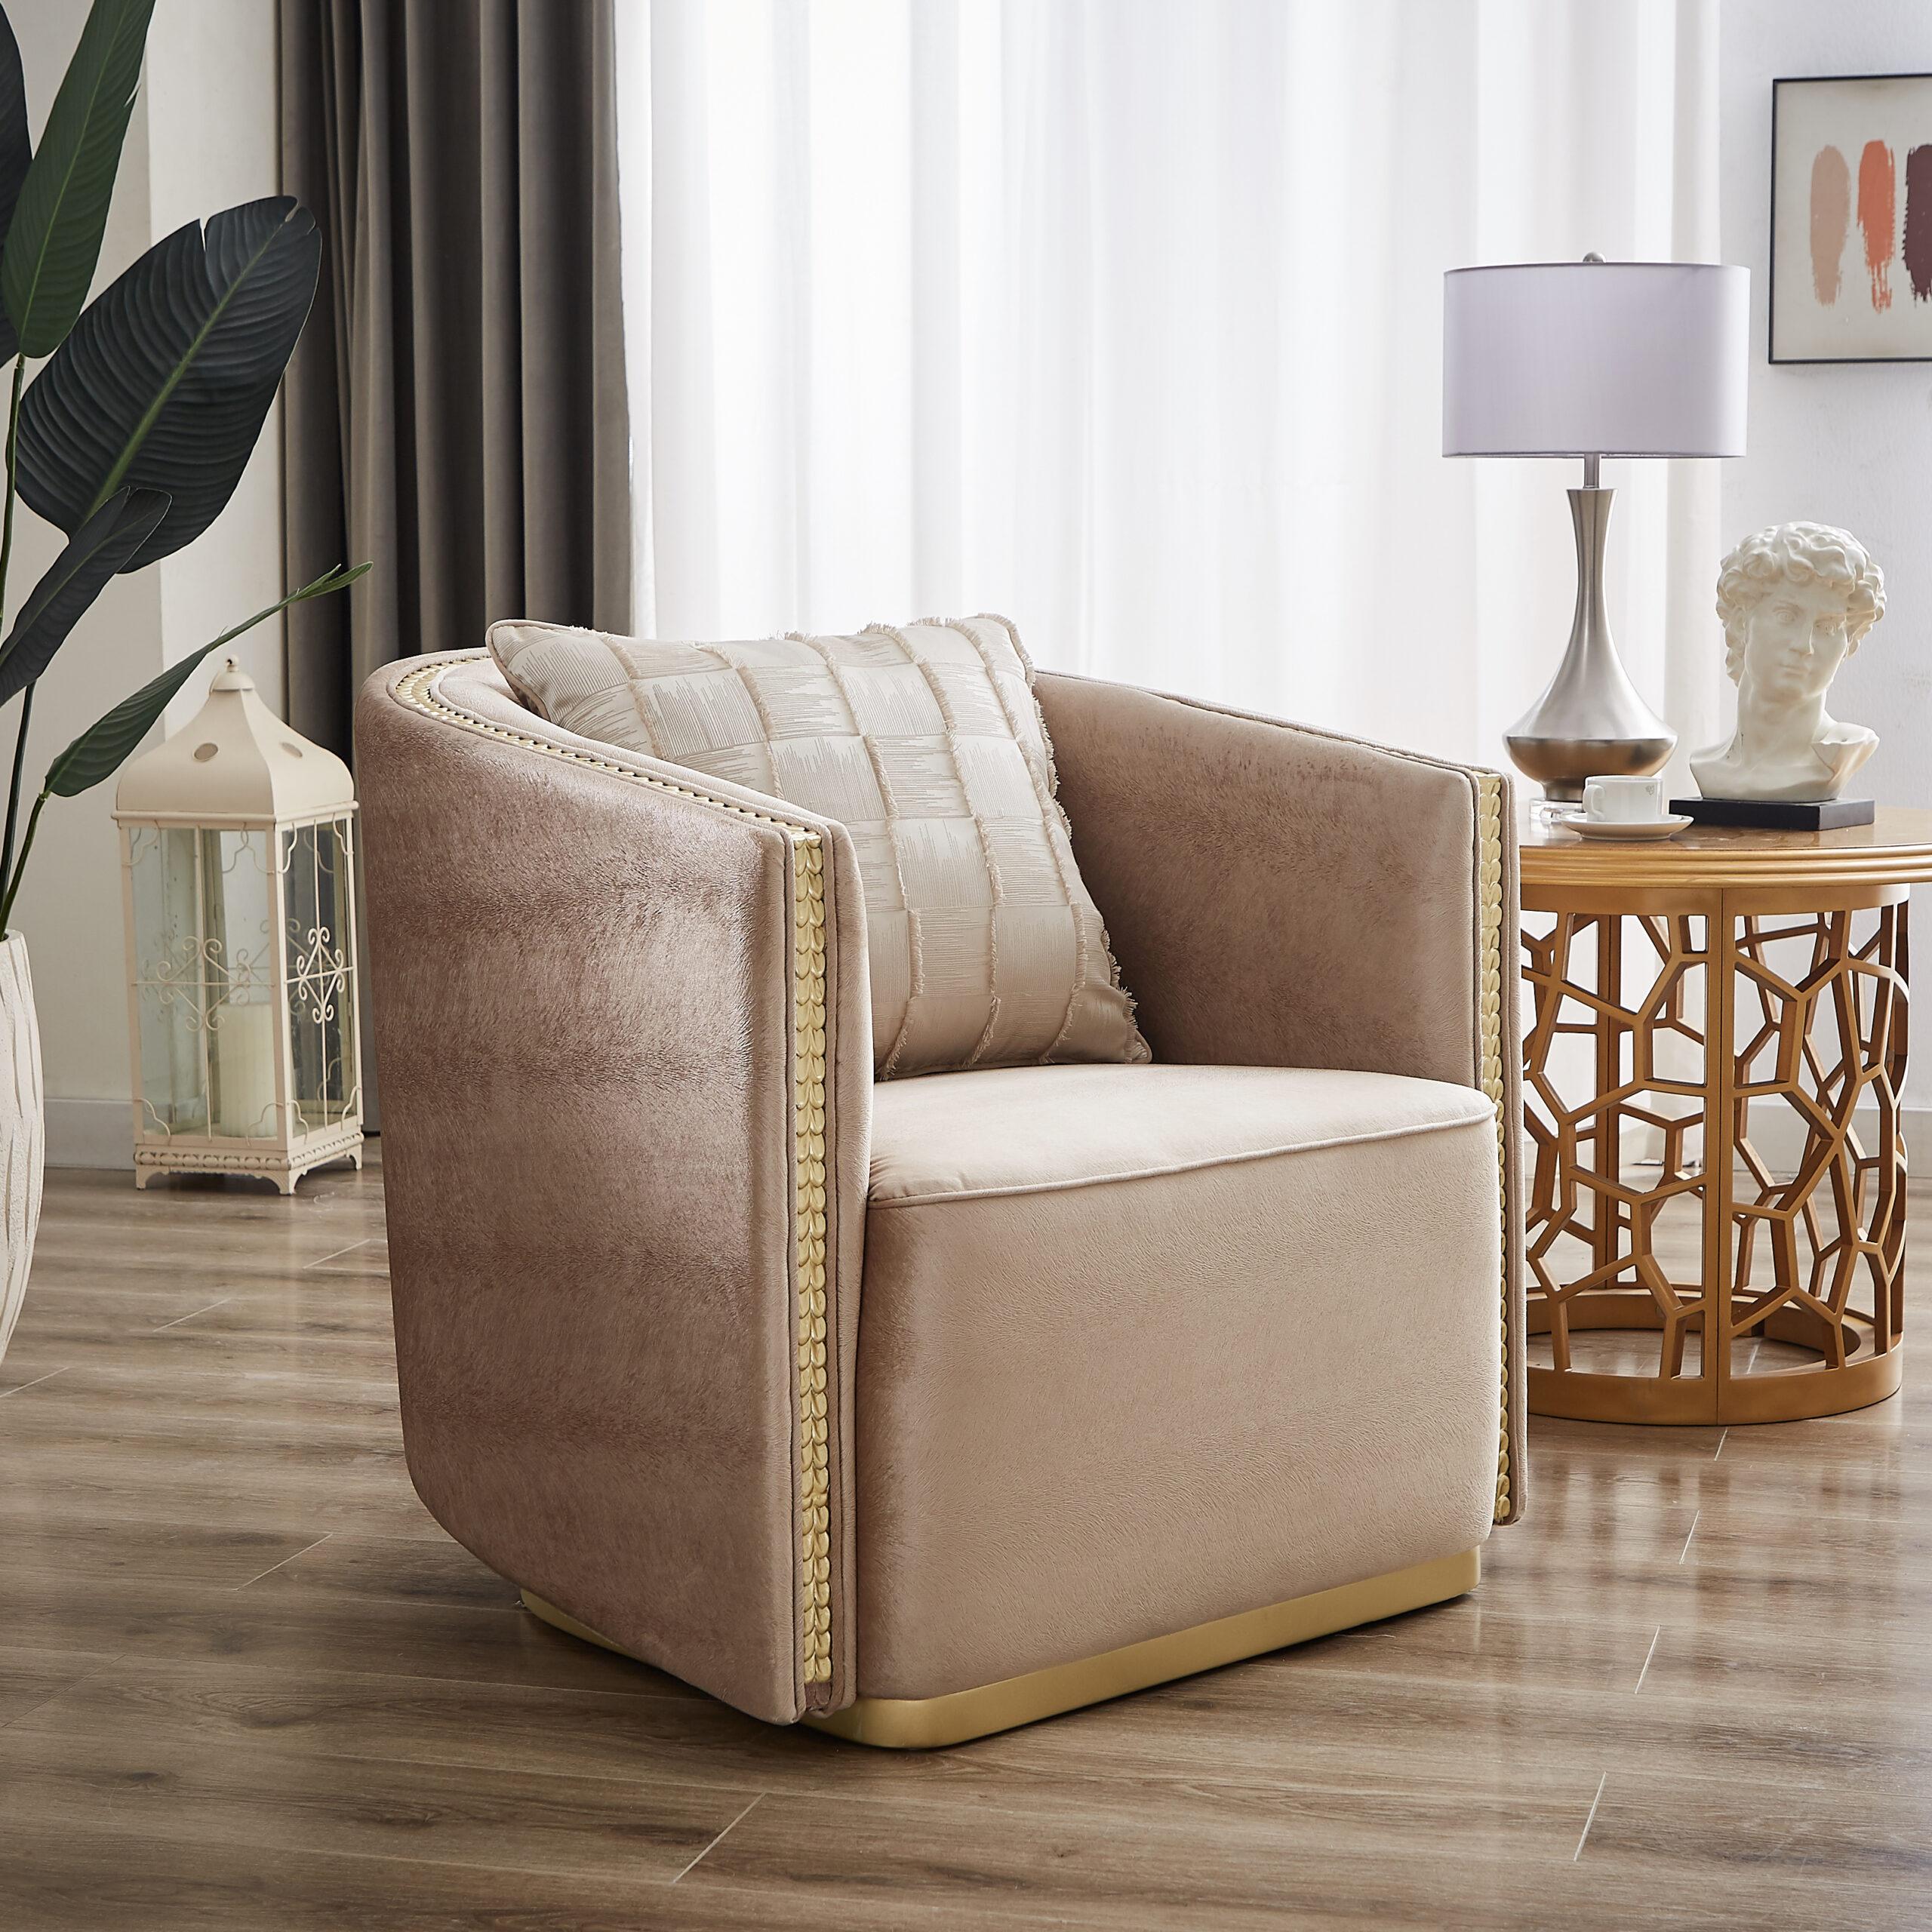 

    
Homey Design Furniture HD-9040 Sofa HD-S9040 Sofa Gold/Beige HD-S9040
